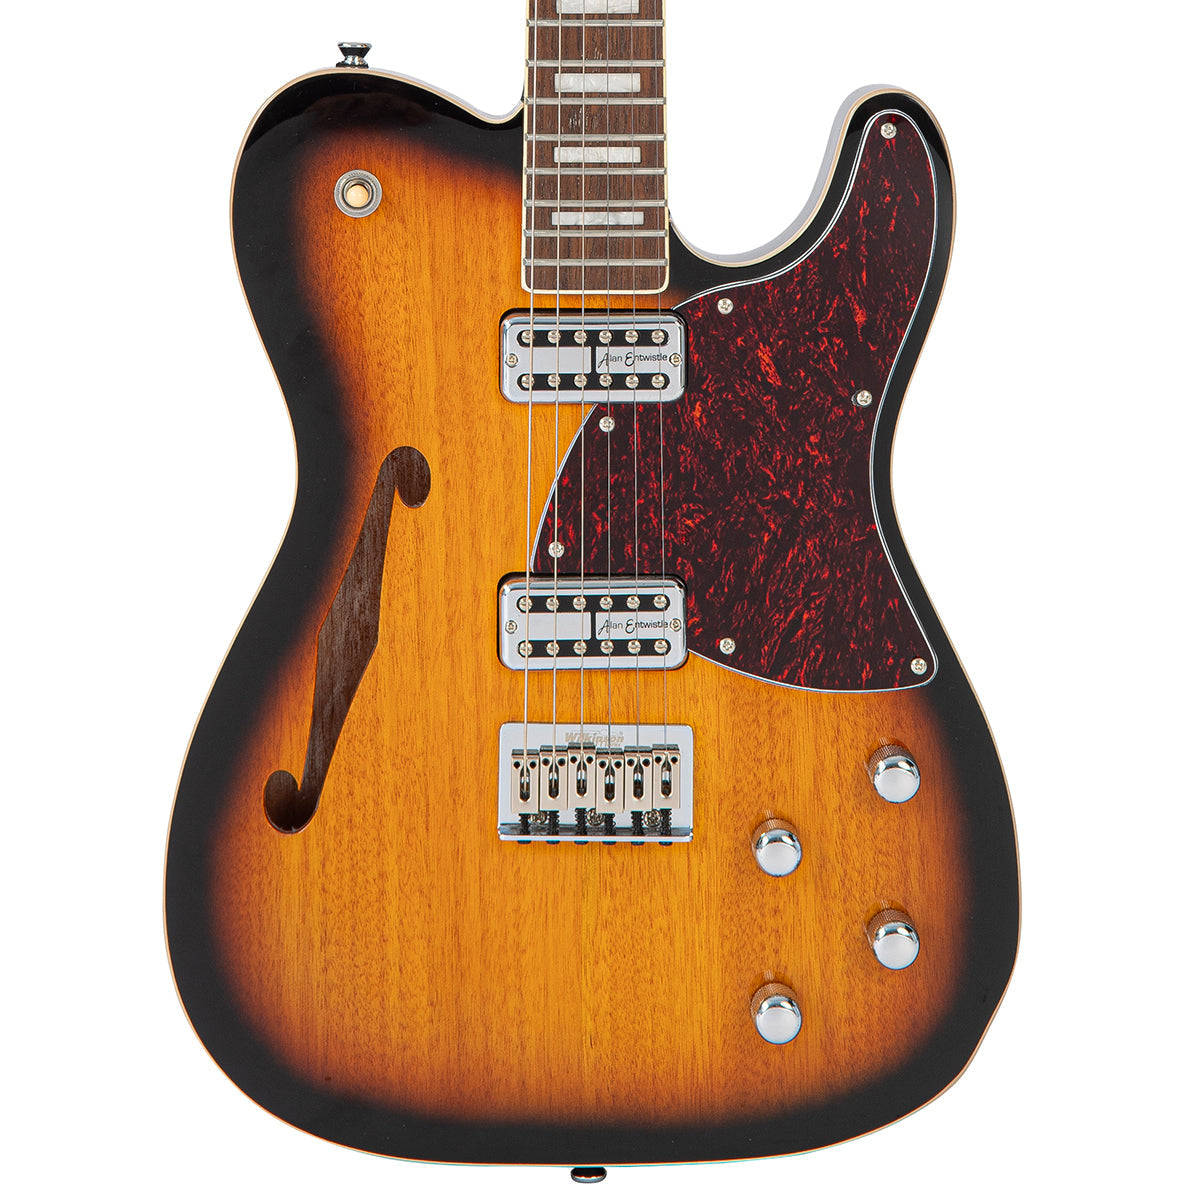 Vintage REVO Series 'Midline' Guitar ~ Two-Tone Sunburst, Electric Guitars for sale at Richards Guitars.